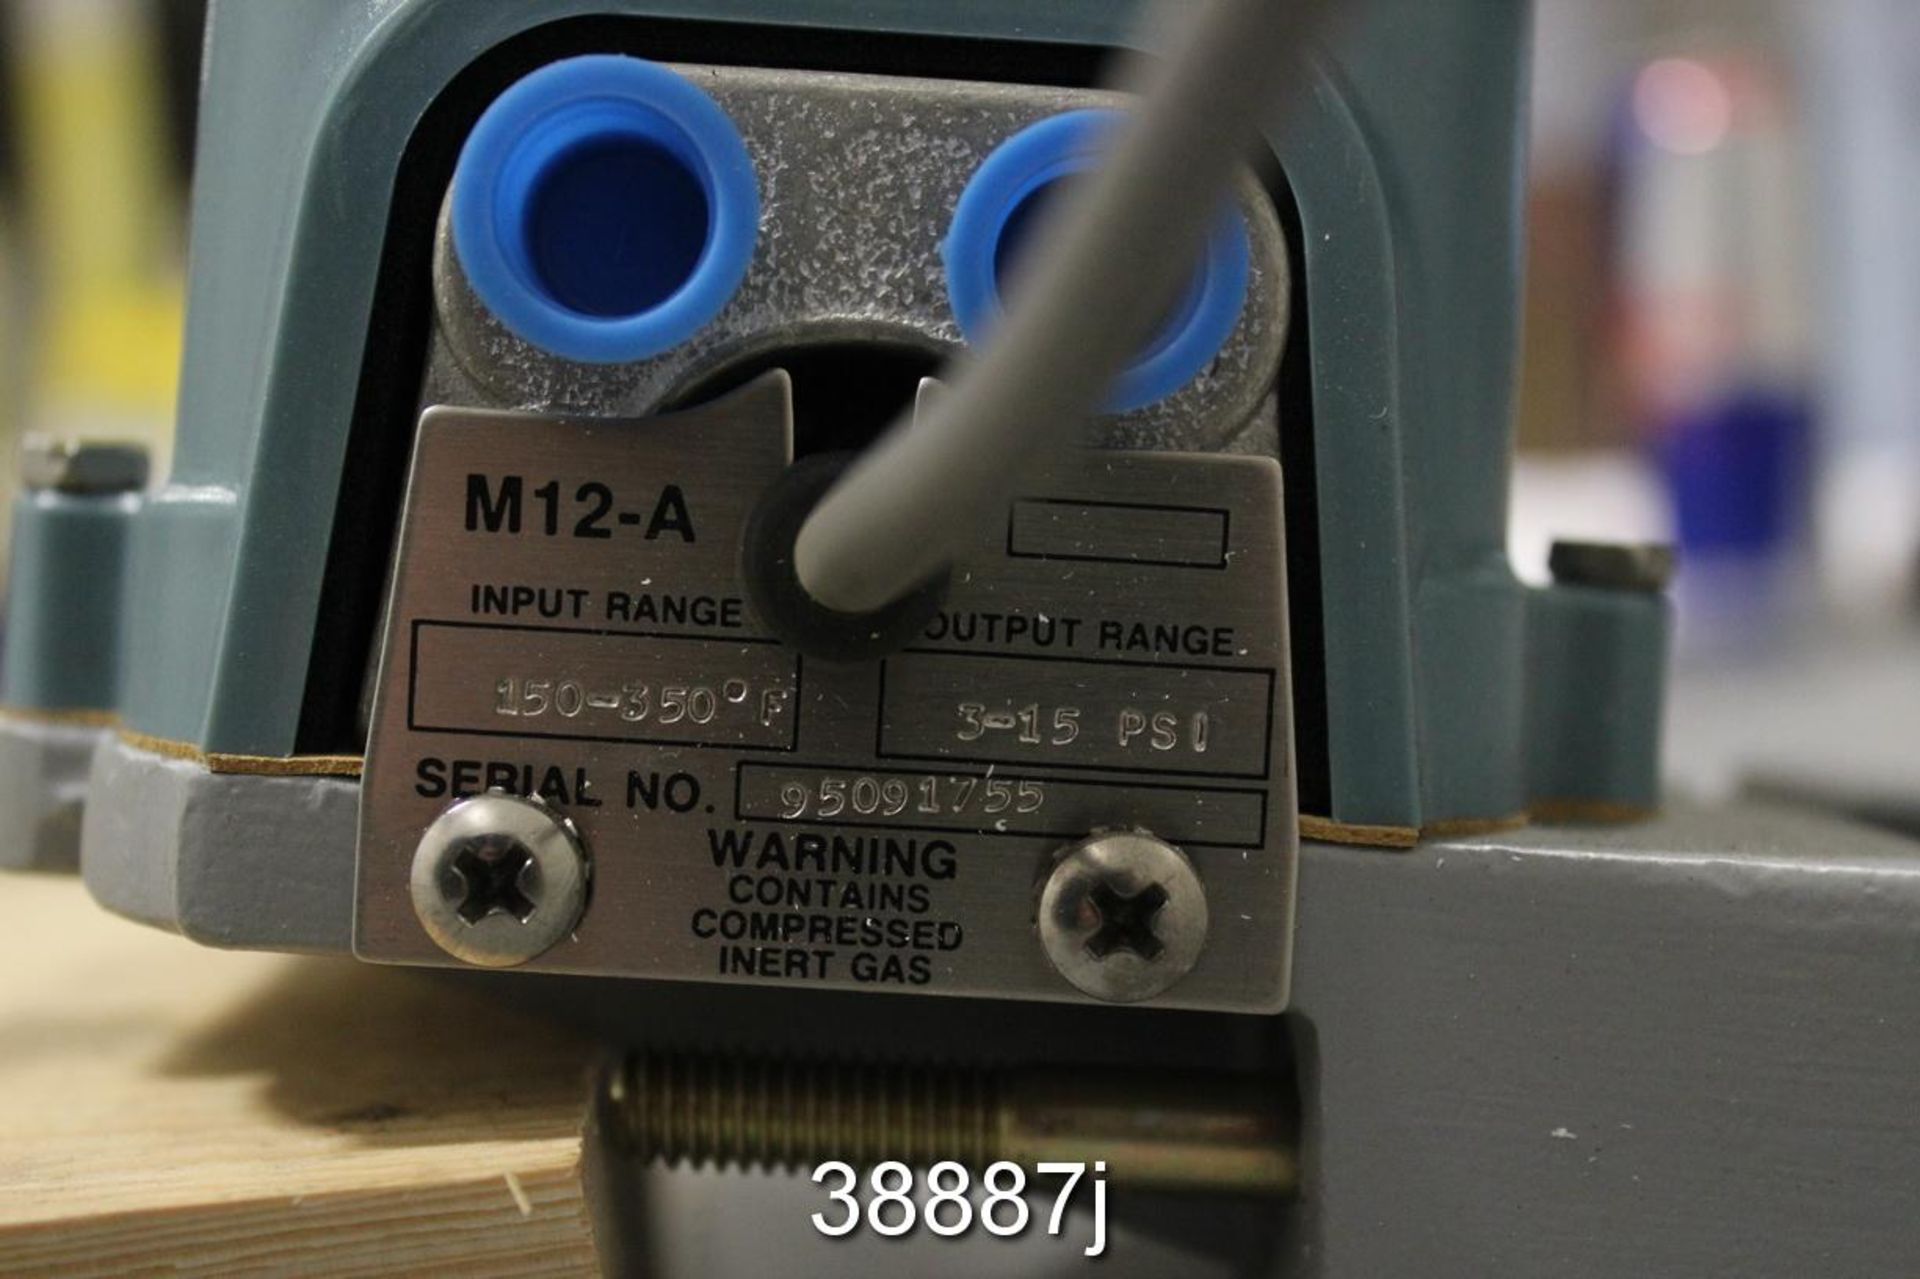 Foxboro 12A Temperature Transmitter, Model 12a, Input Range 150-350 Fahrenheit, Output Range 3-15 - Image 10 of 10